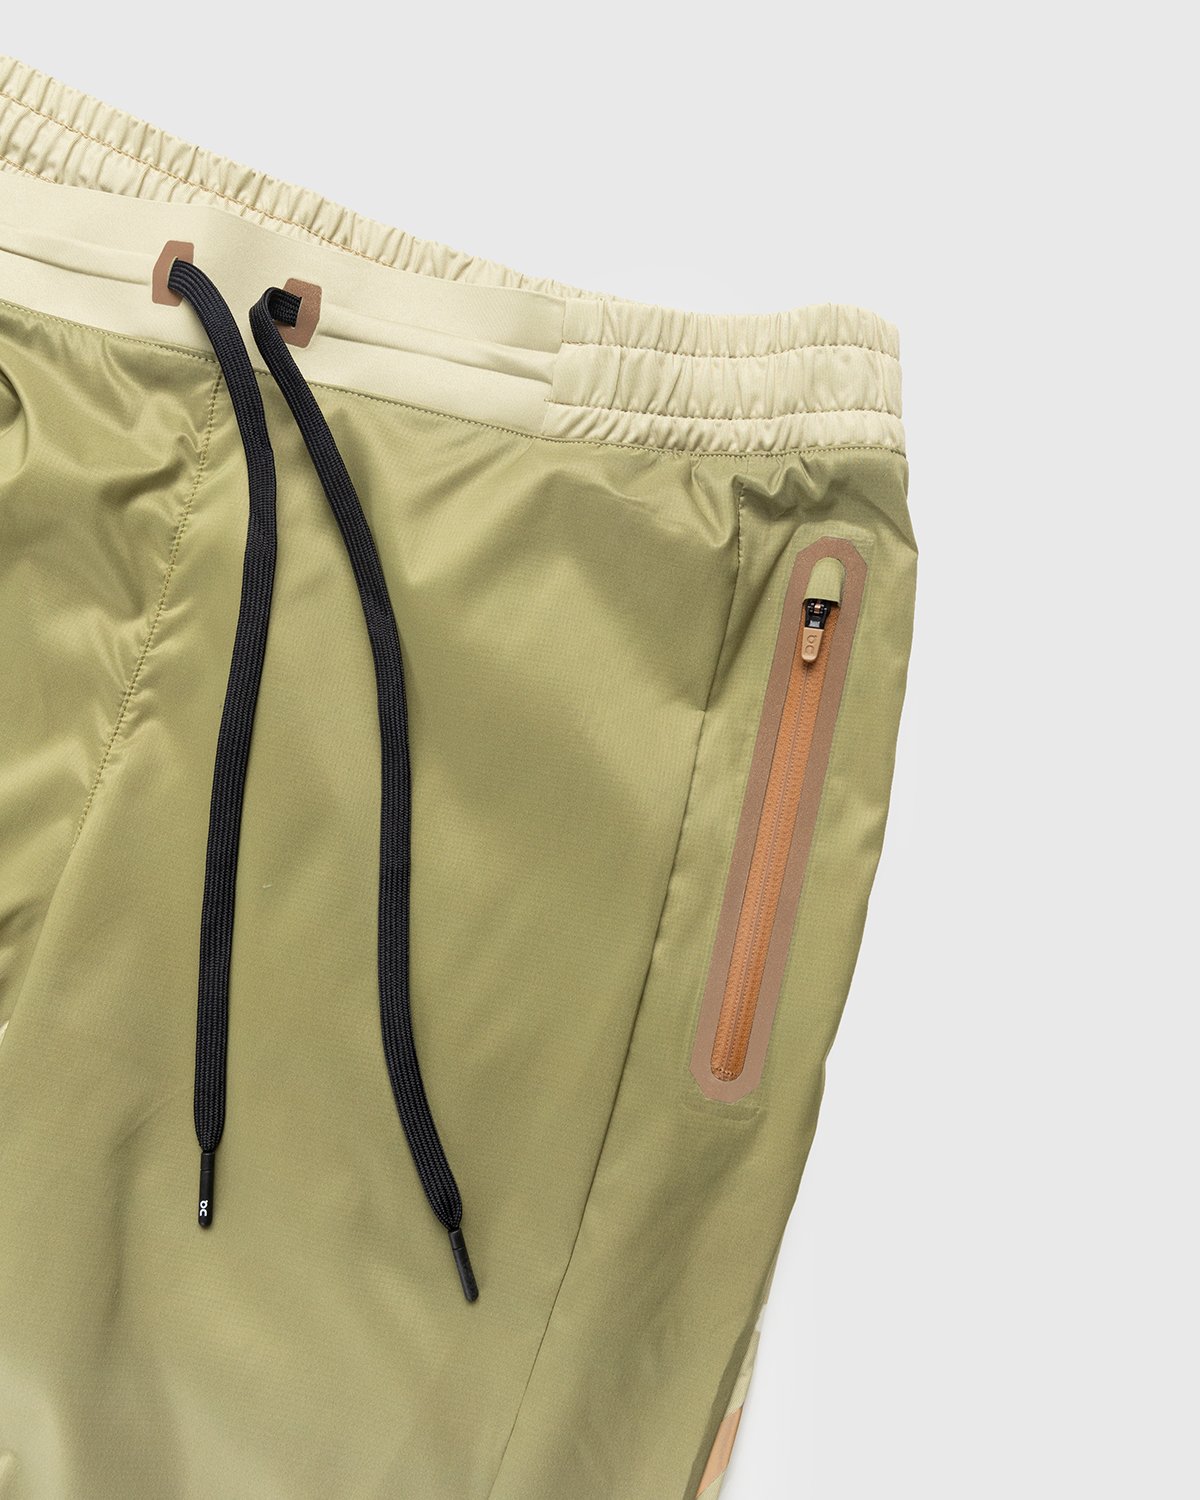 Loewe x On - Men's Technical Running Pants Gradient Khaki - Clothing - Green - Image 3